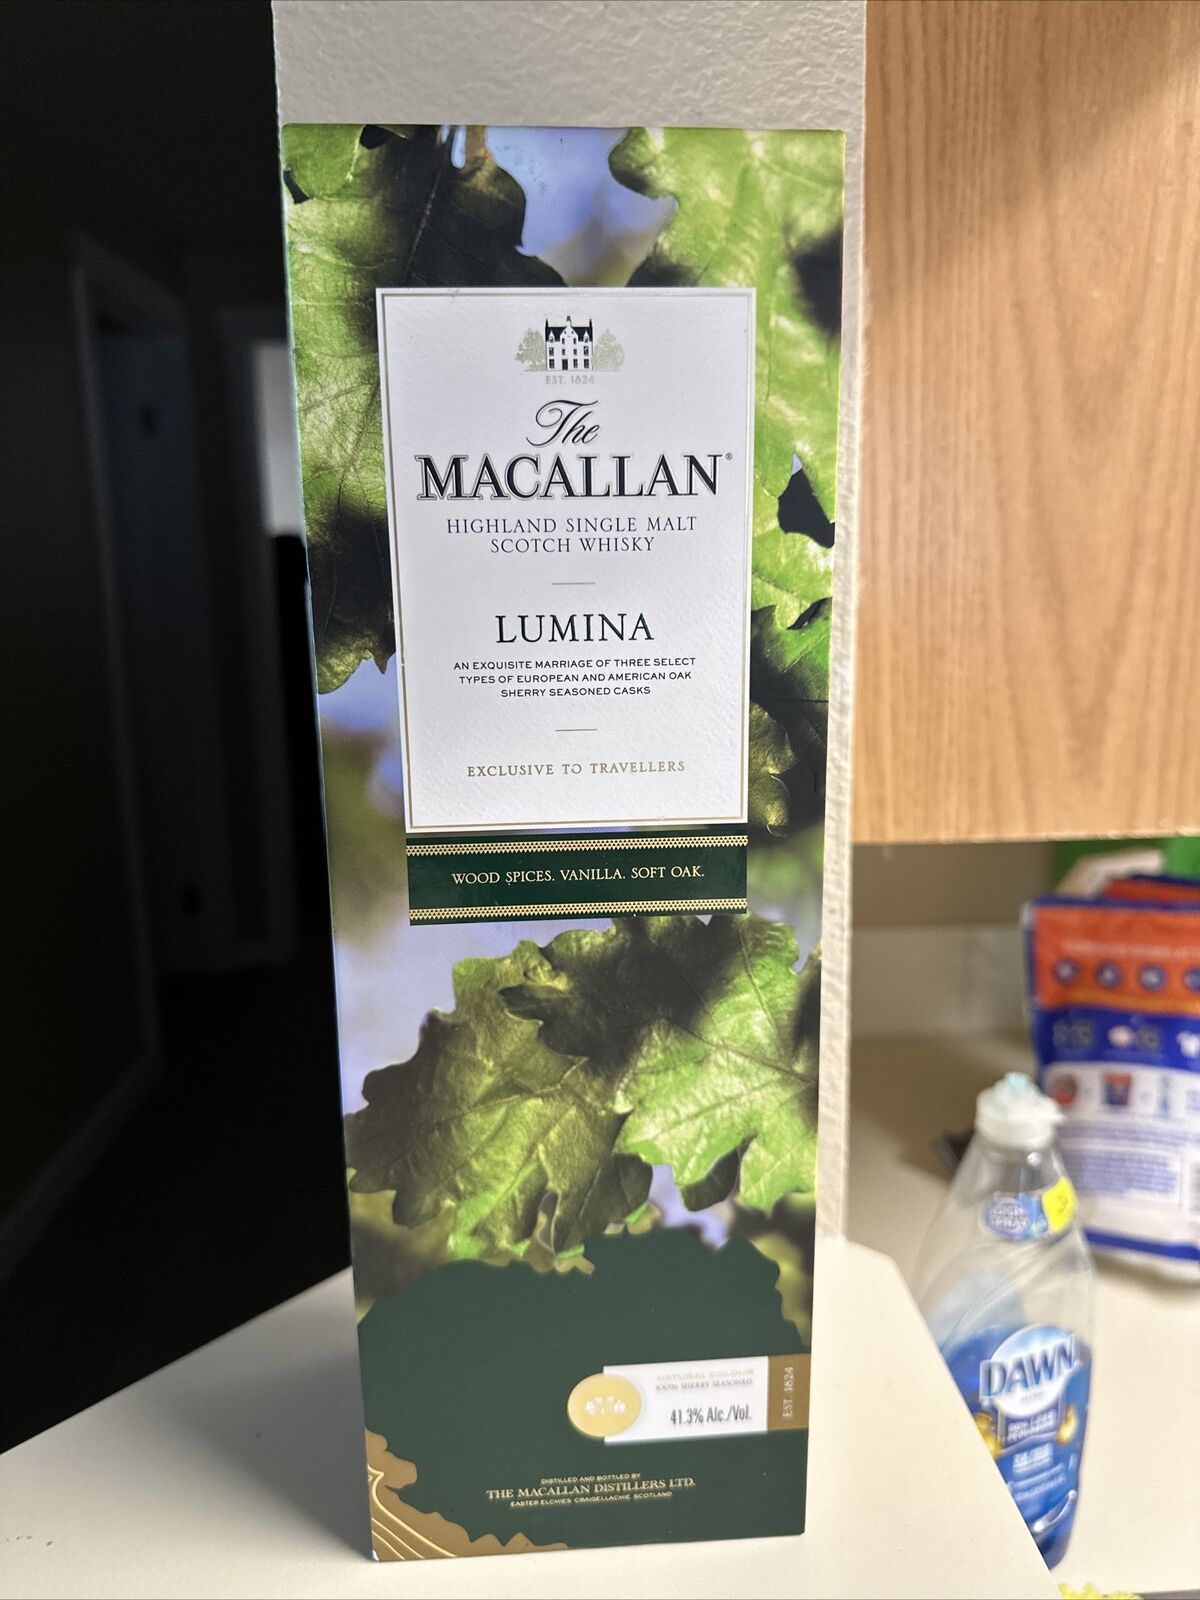 The Macallan Highland Single Malt Scotch Whisky - Lumina